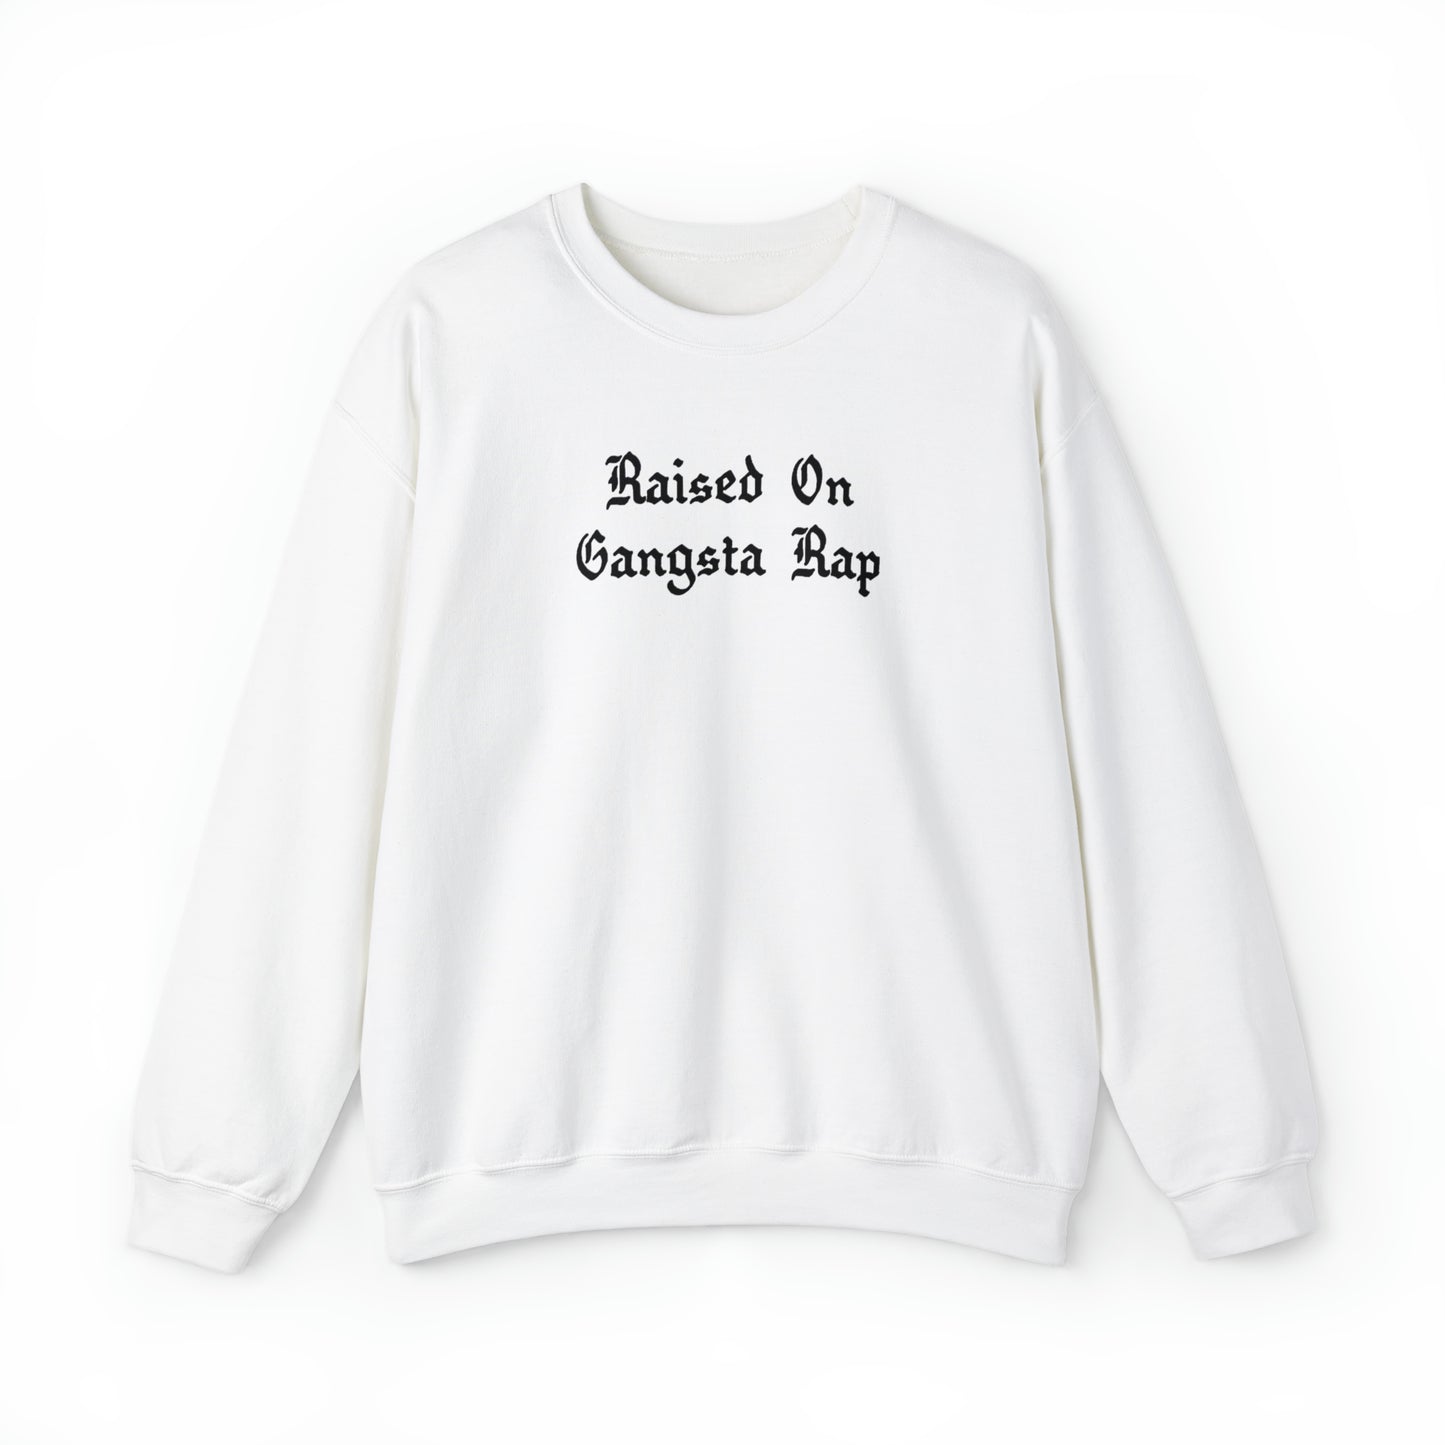 Raised on Gangsta Rap Crewneck Sweatshirt for Rap & Hip-Hop Lover, Gangsta Rap Crewneck